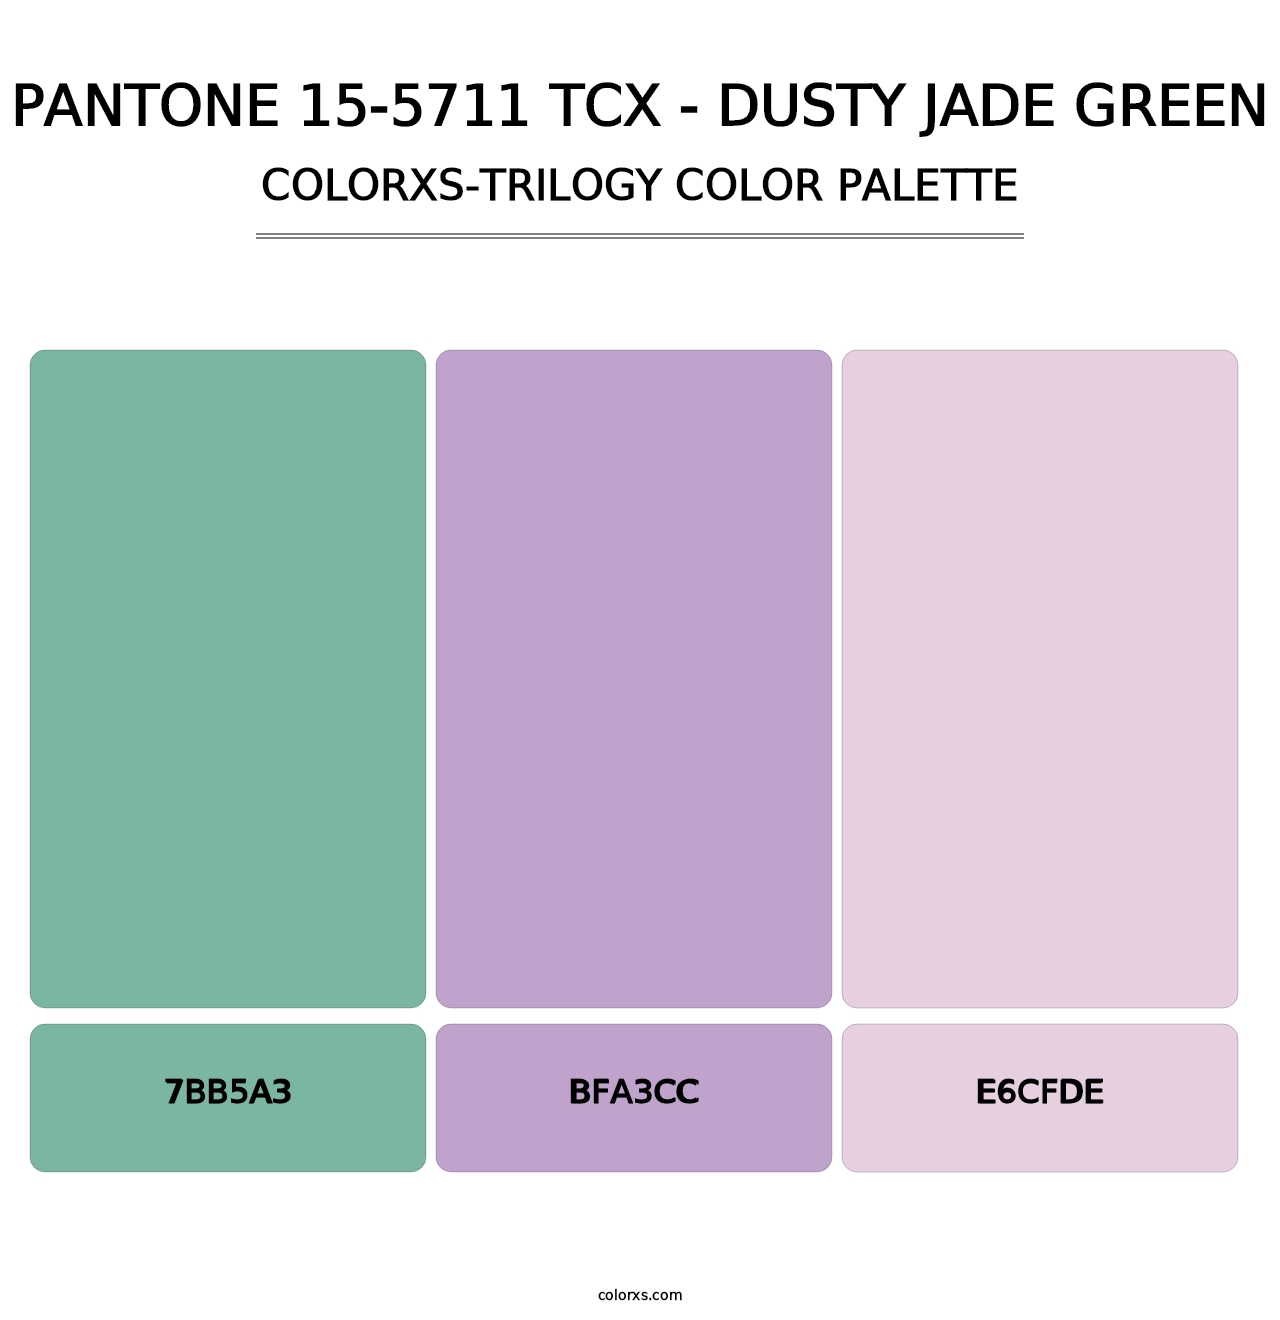 PANTONE 15-5711 TCX - Dusty Jade Green - Colorxs Trilogy Palette